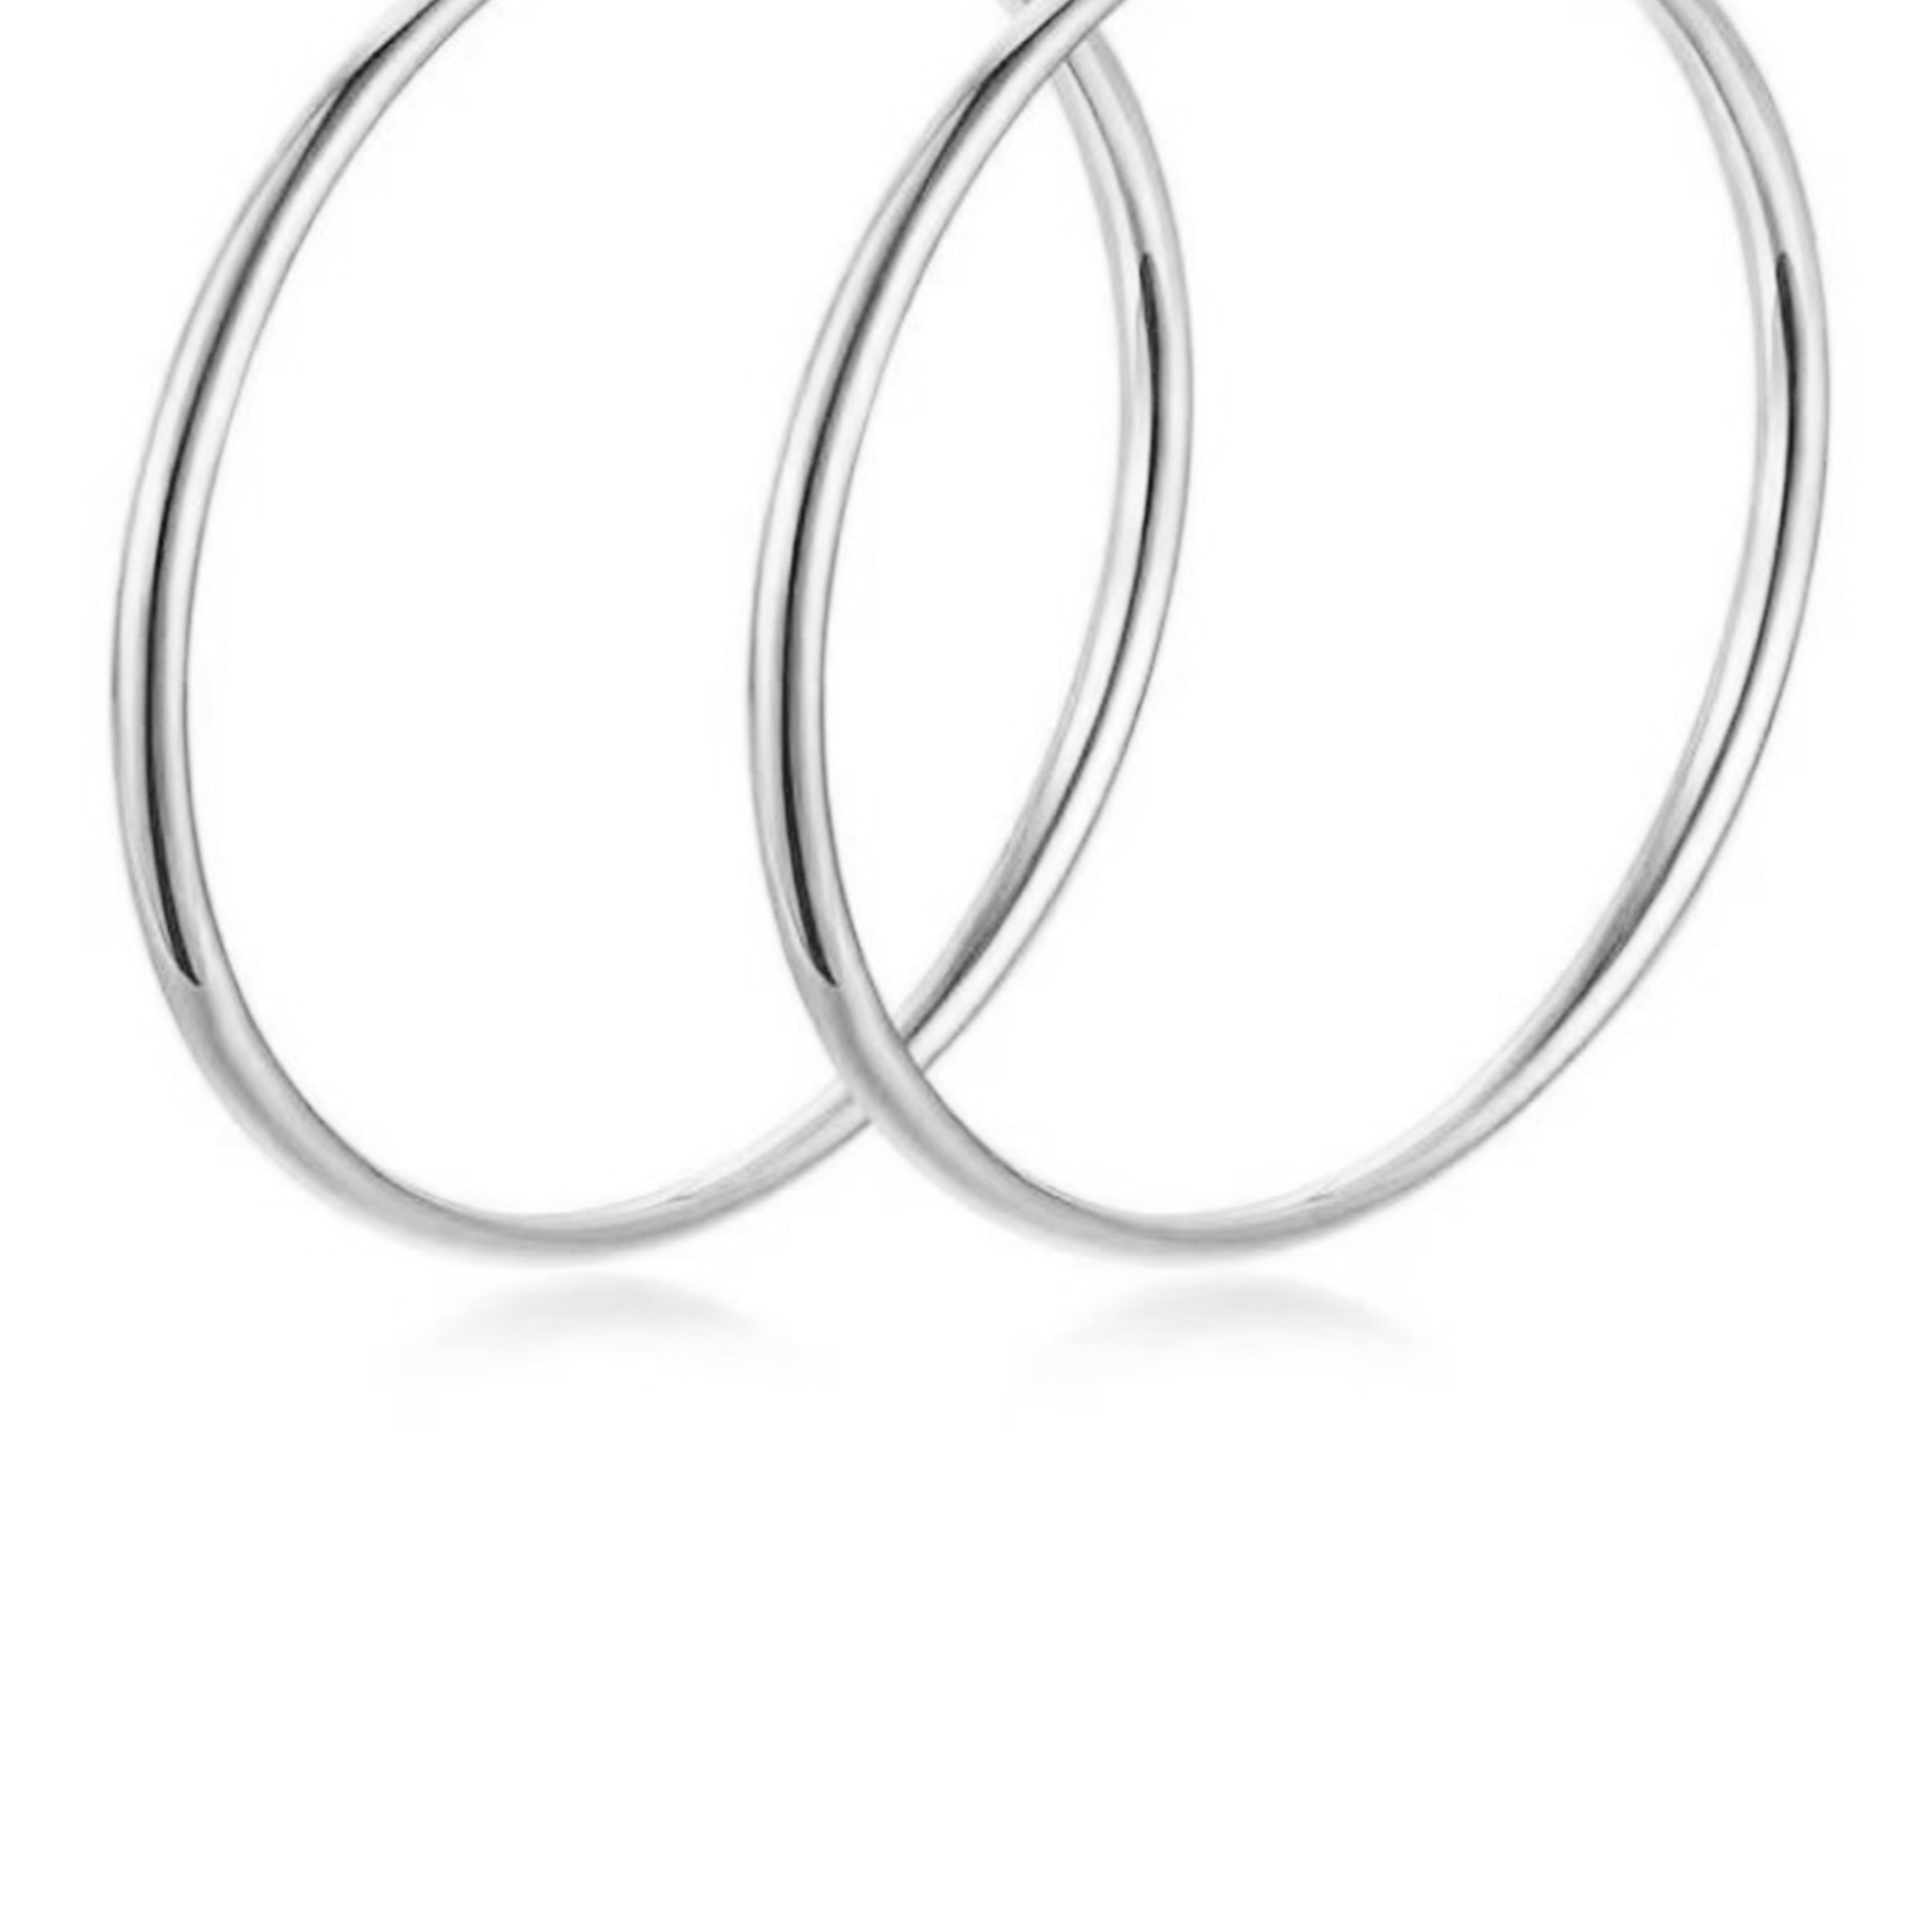 Stainless Steel Hoop Earrings E3890